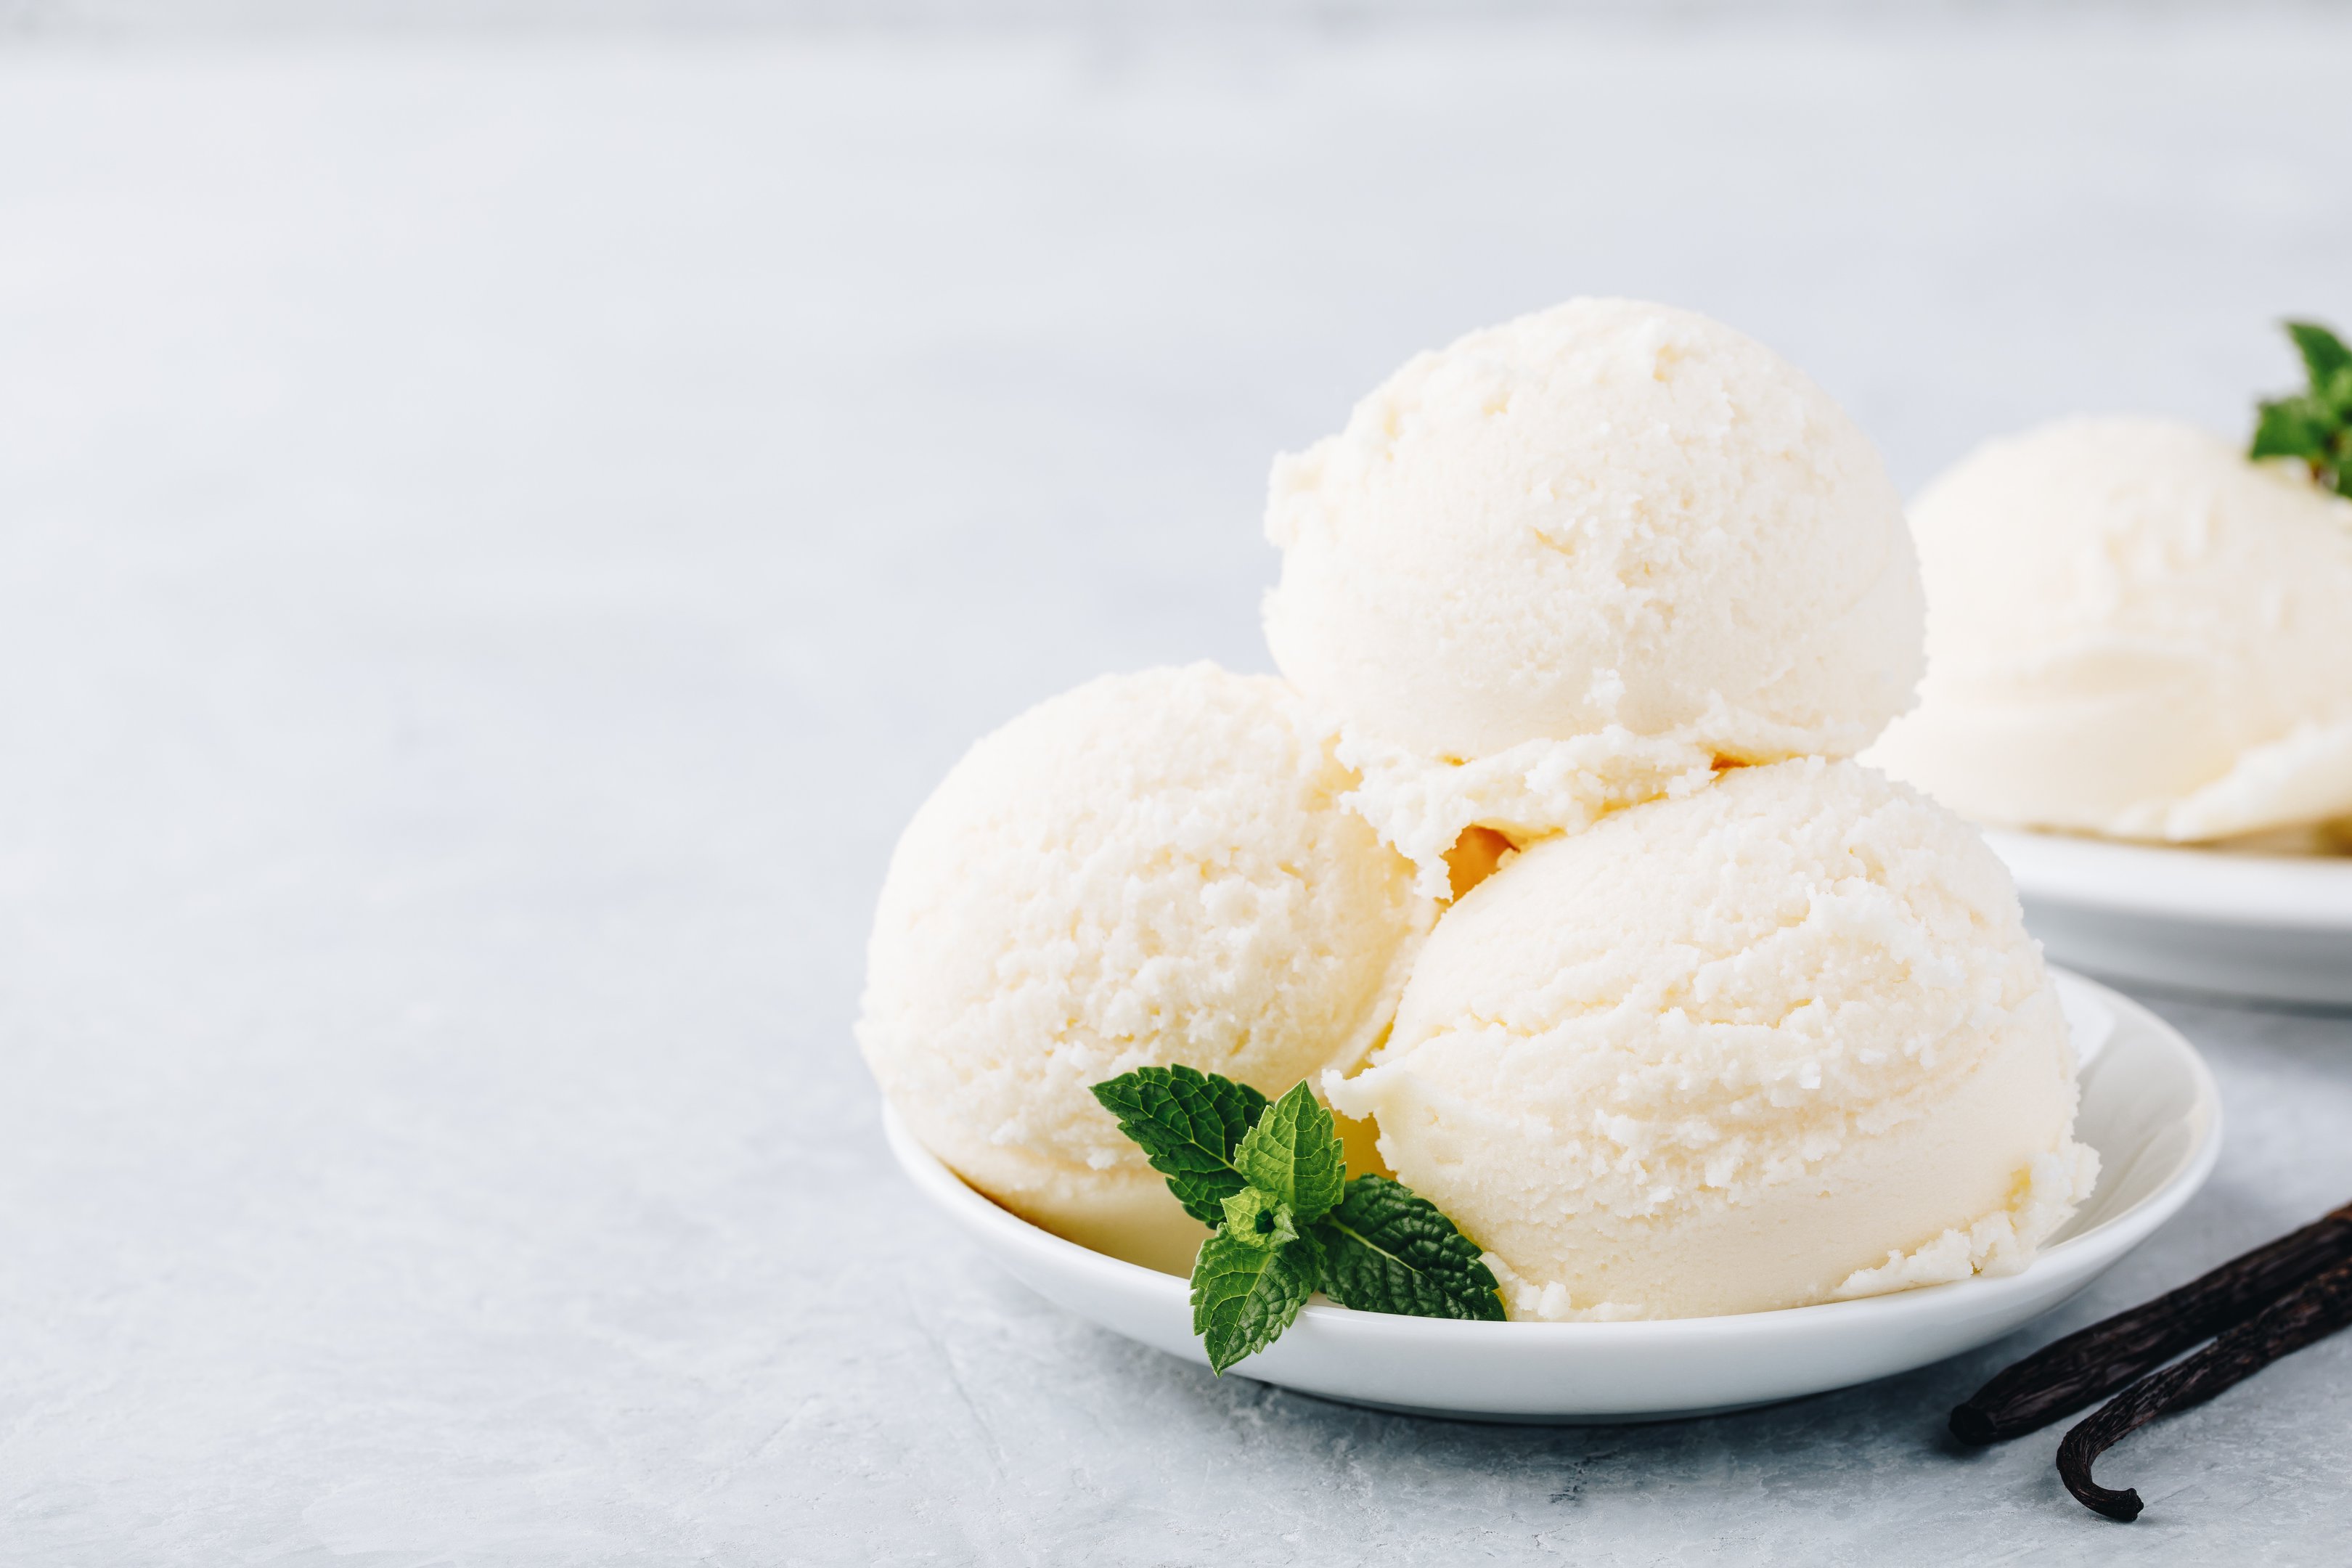 Vanilla ice cream recipe for ice cream maker with mint leaves